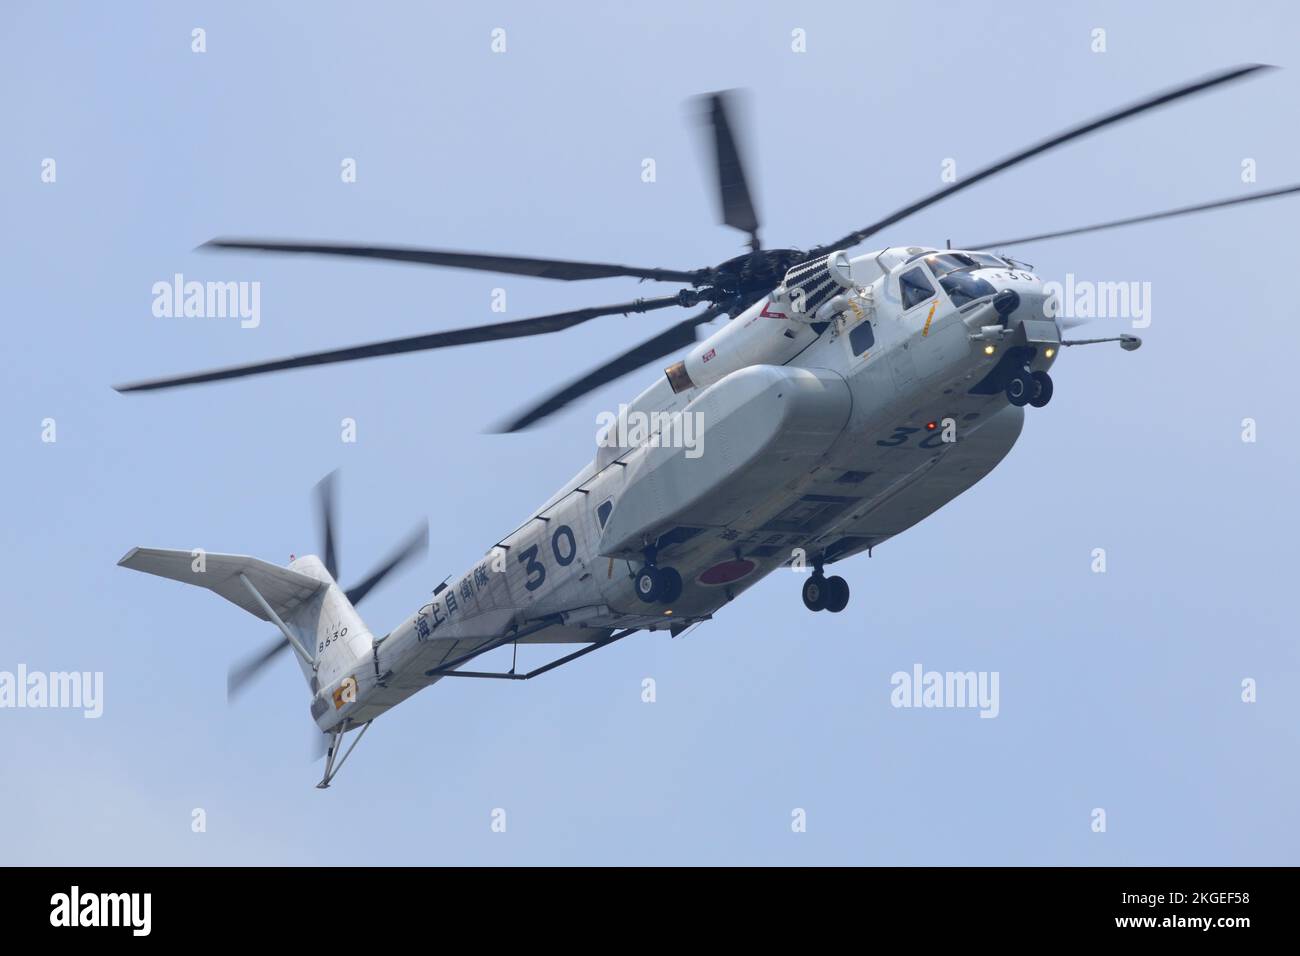 Präfektur Kanagawa, Japan - 15. Juli 2014: Japan Maritime Self-Defense Force Sikorsky MH-53E Sea Dragon Airborne Mine Gegenmaßnahmen Helicopter. Stockfoto